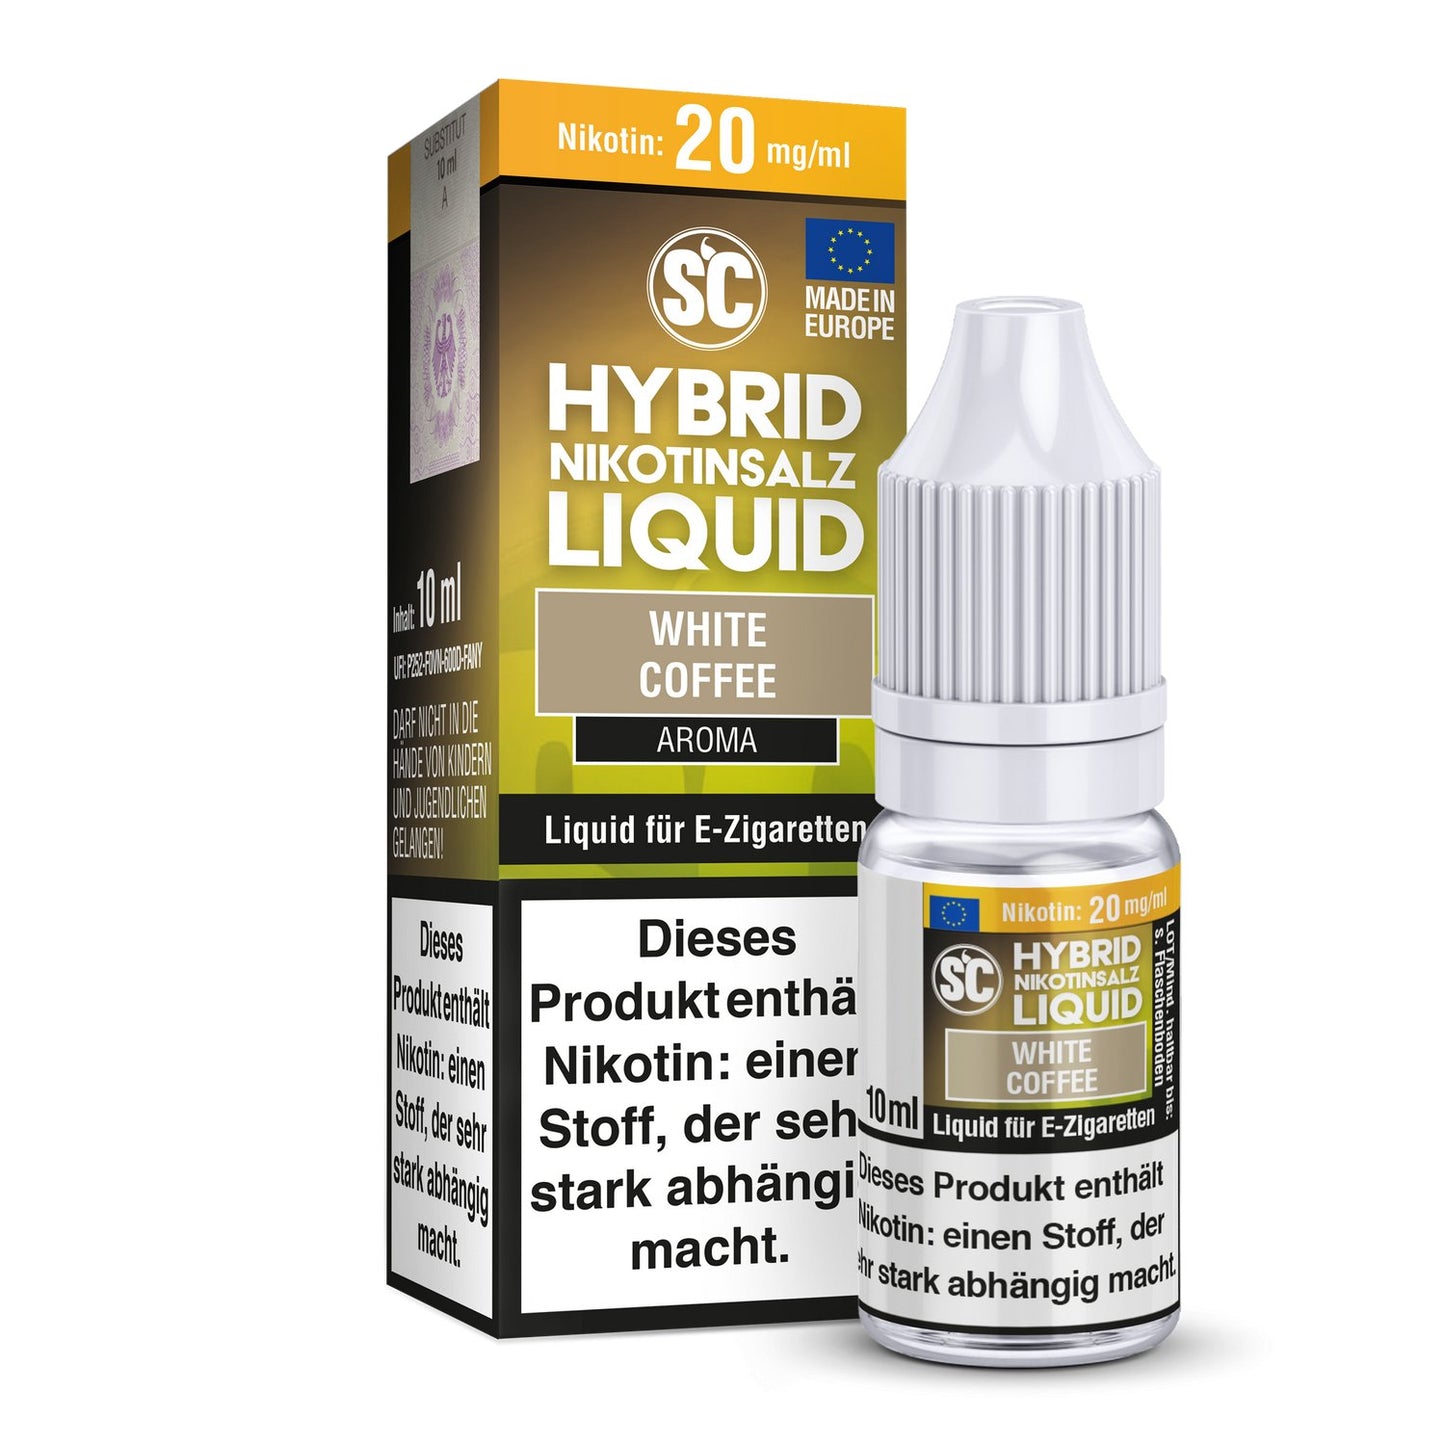 SC - White Coffee - 10ml Fertigliquid (Hybrid Nikotinsalz) - 1er Packung 20 mg/ml - Vapes4you